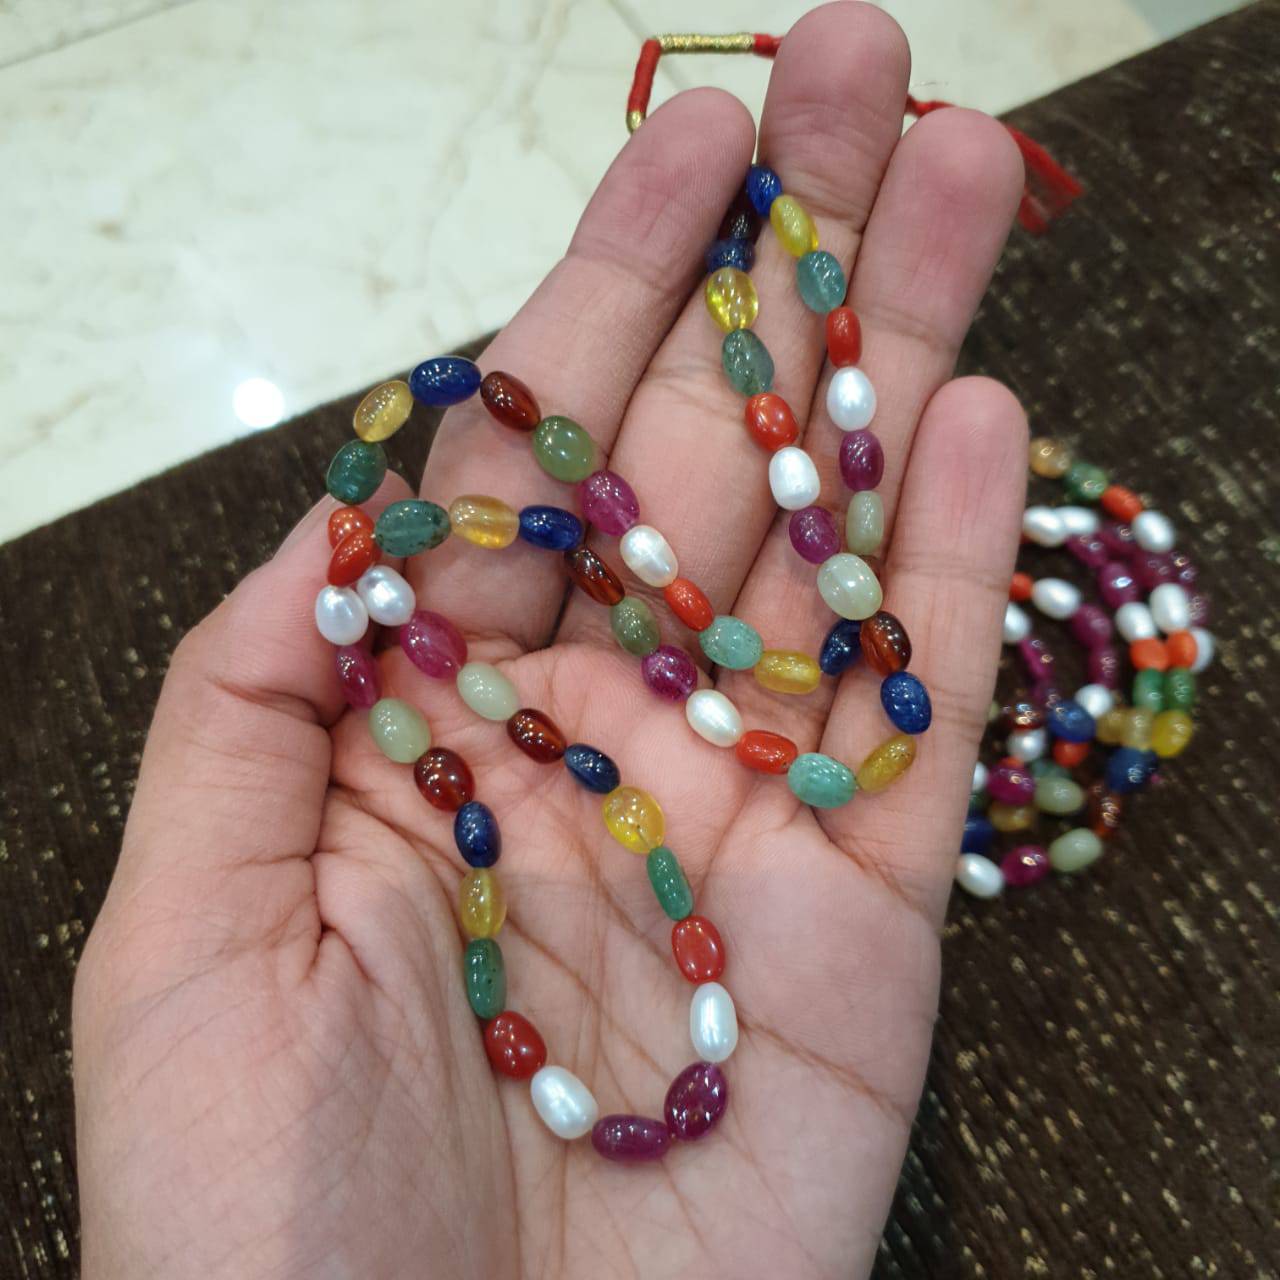 Navratan Chakra 9 Precious stones: Sapphire, Ruby, Emerald beads - The LabradoriteKing